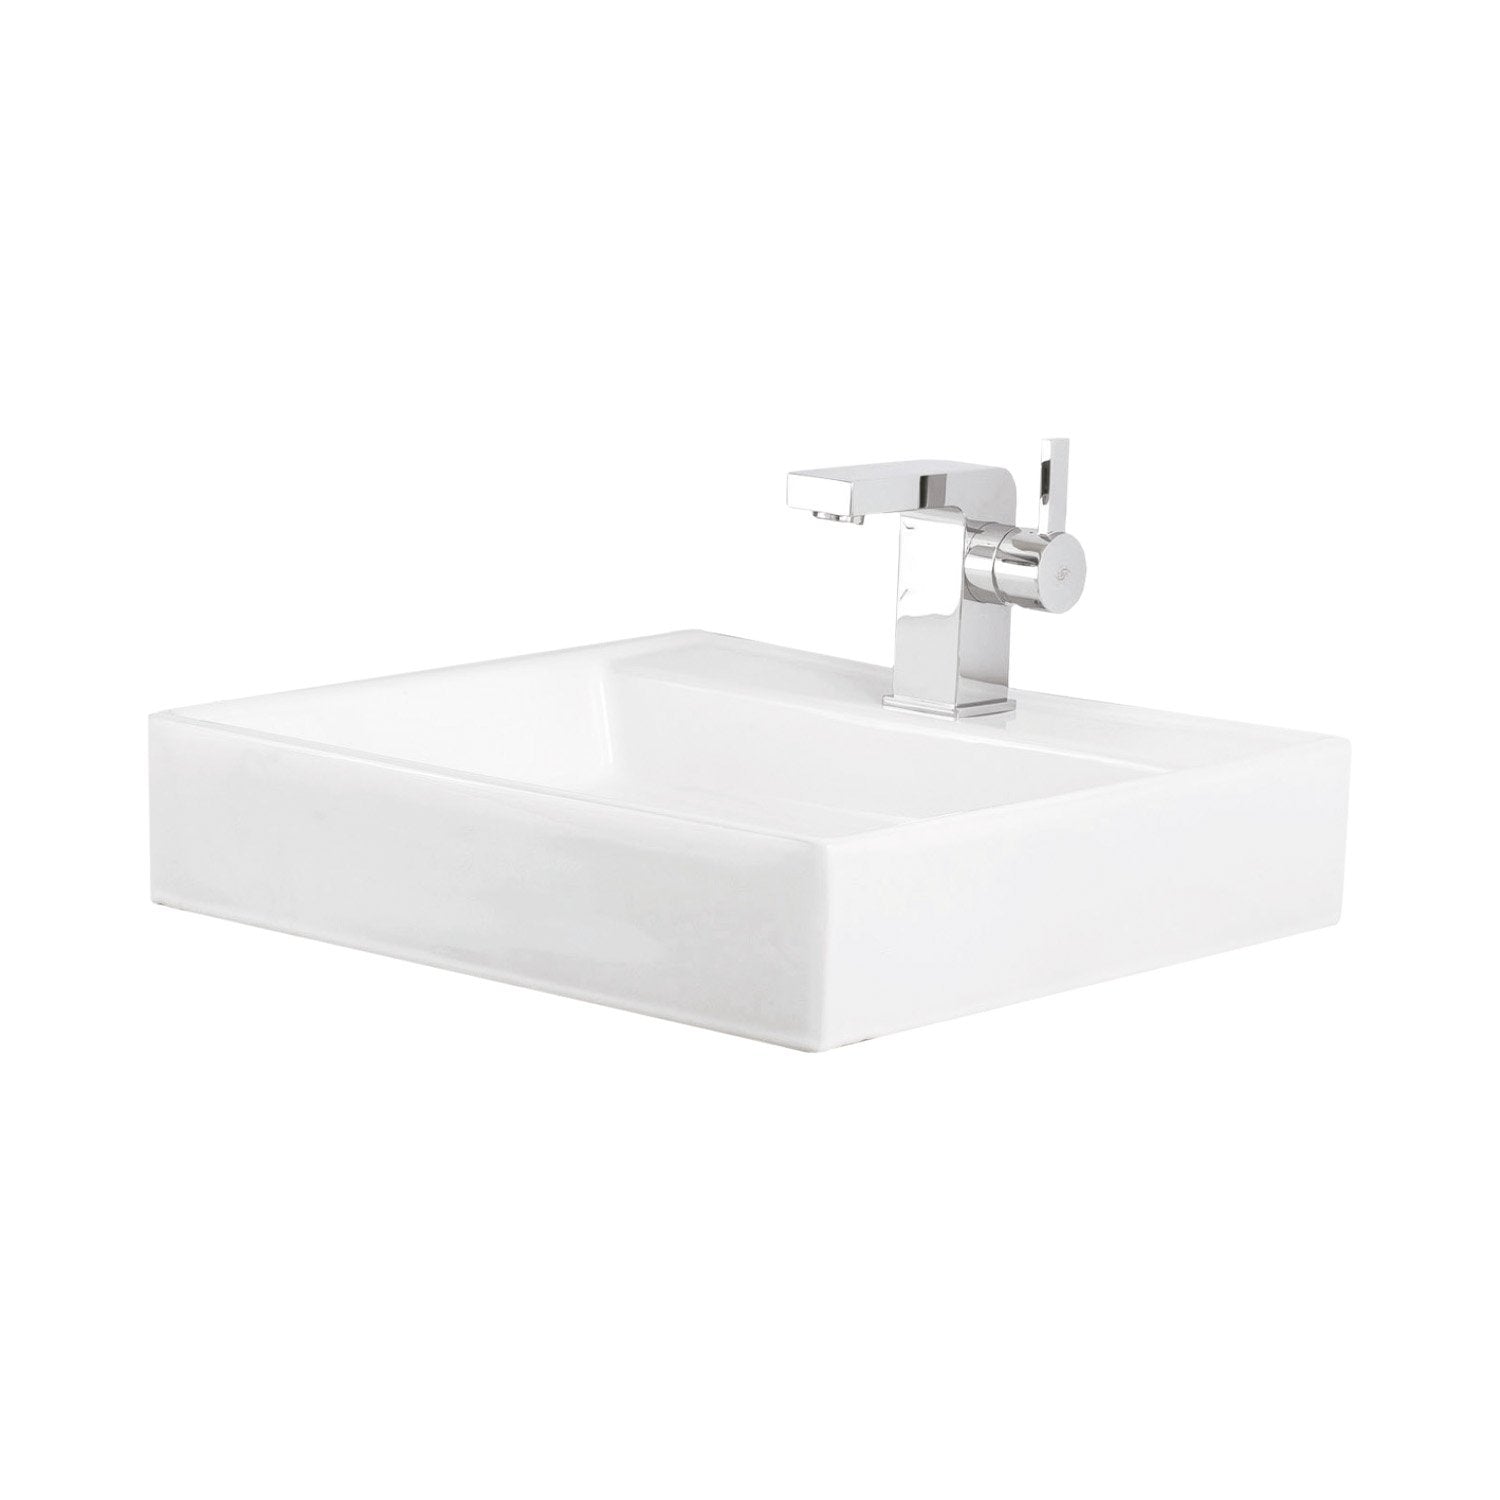 DAX Ceramic Square Single Bowl Bathroom Vessel Sink, White Finish, 17-5/16 x 39-3/8 x 17-5/16 Inches (BSN-715)